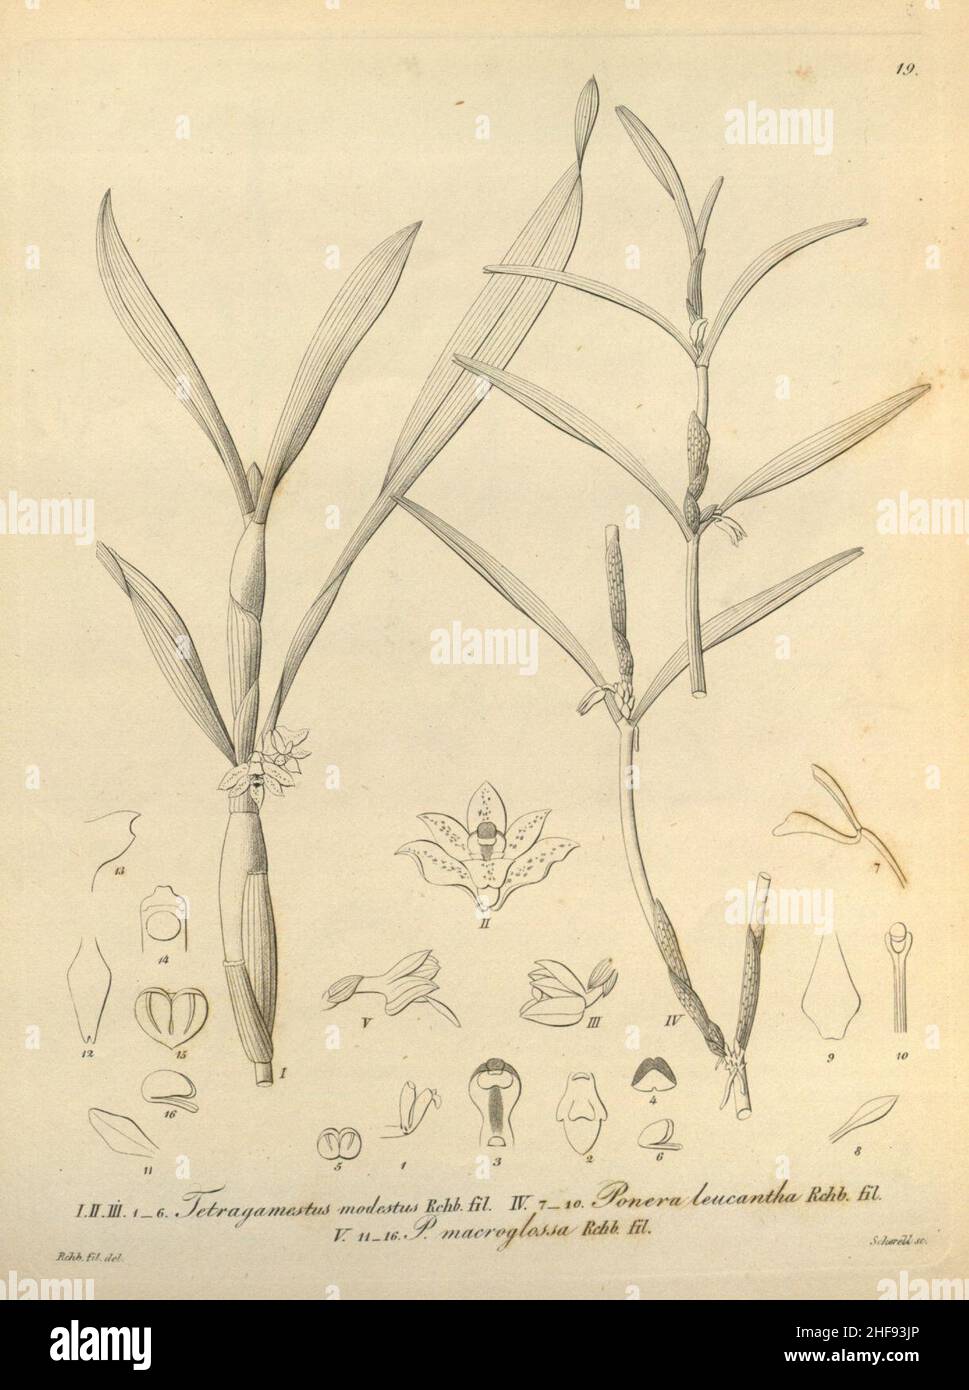 Scaphyglottis modesta (=Tetragamestus modestus) - Xenia v. 1 (1858) tab. 19. Stock Photo